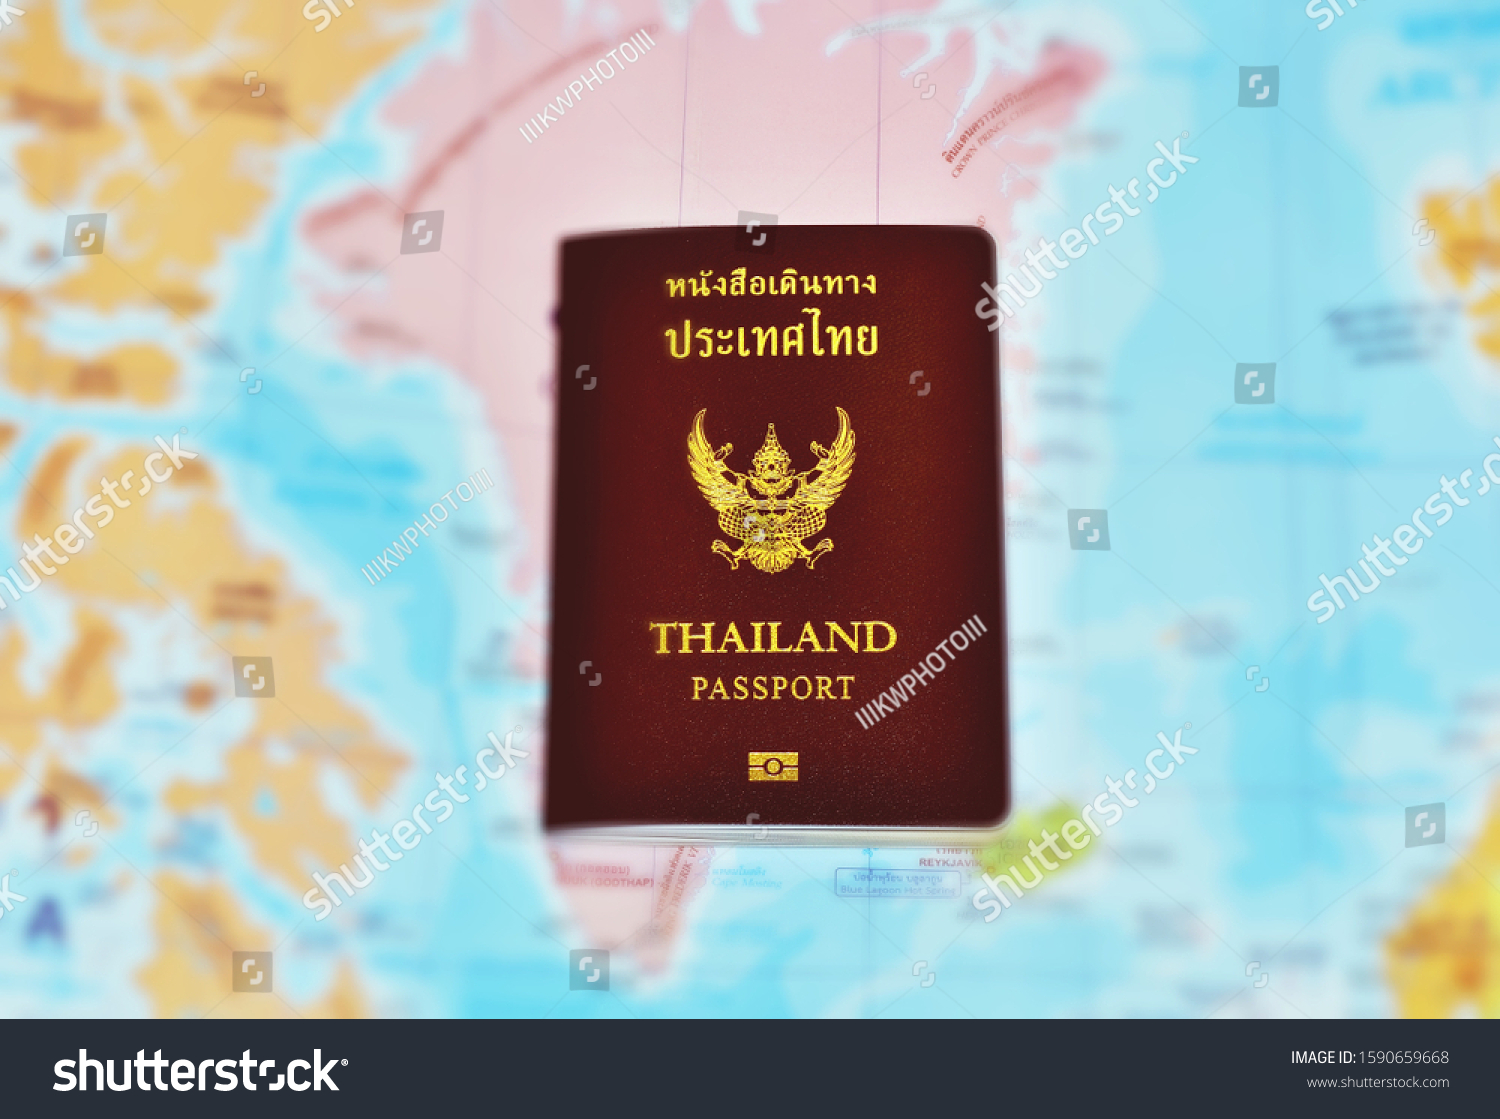 planning travel concept,Thailand passport on blue map - image  #1590659668